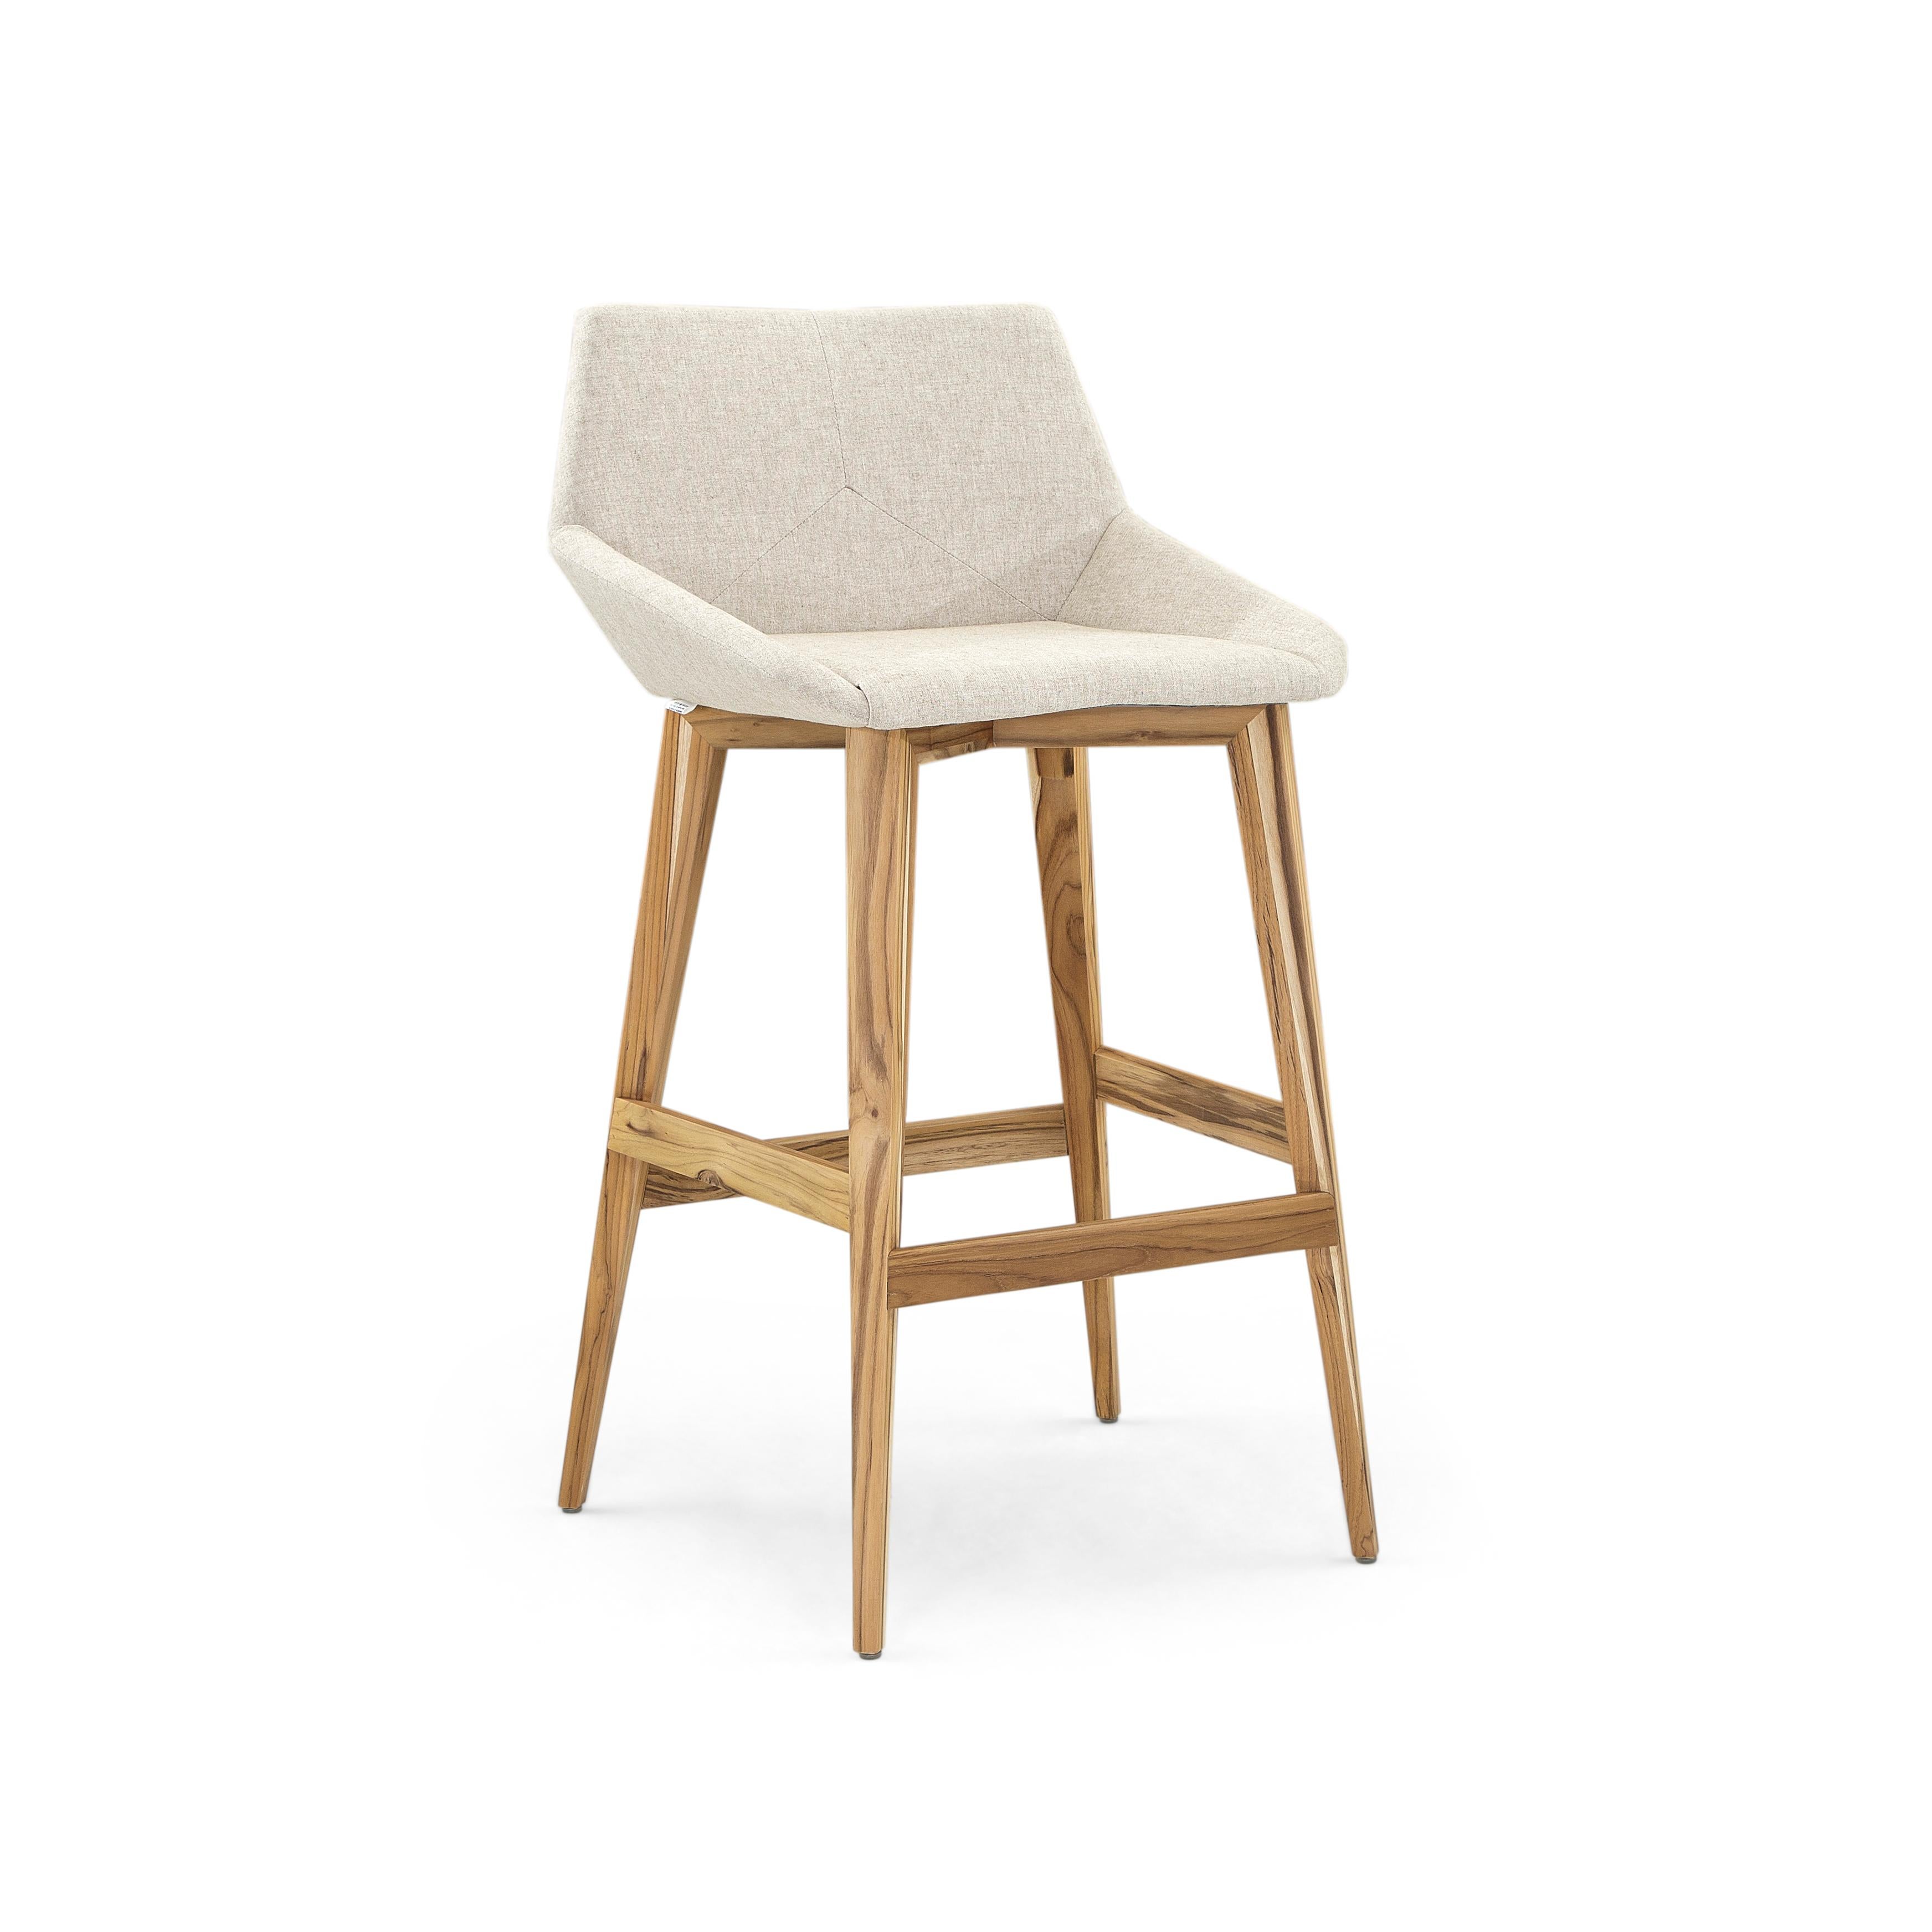 Geometric Cubi Bar Stool with Teak Wood Finish Base and Oatmeal Fabric Seat